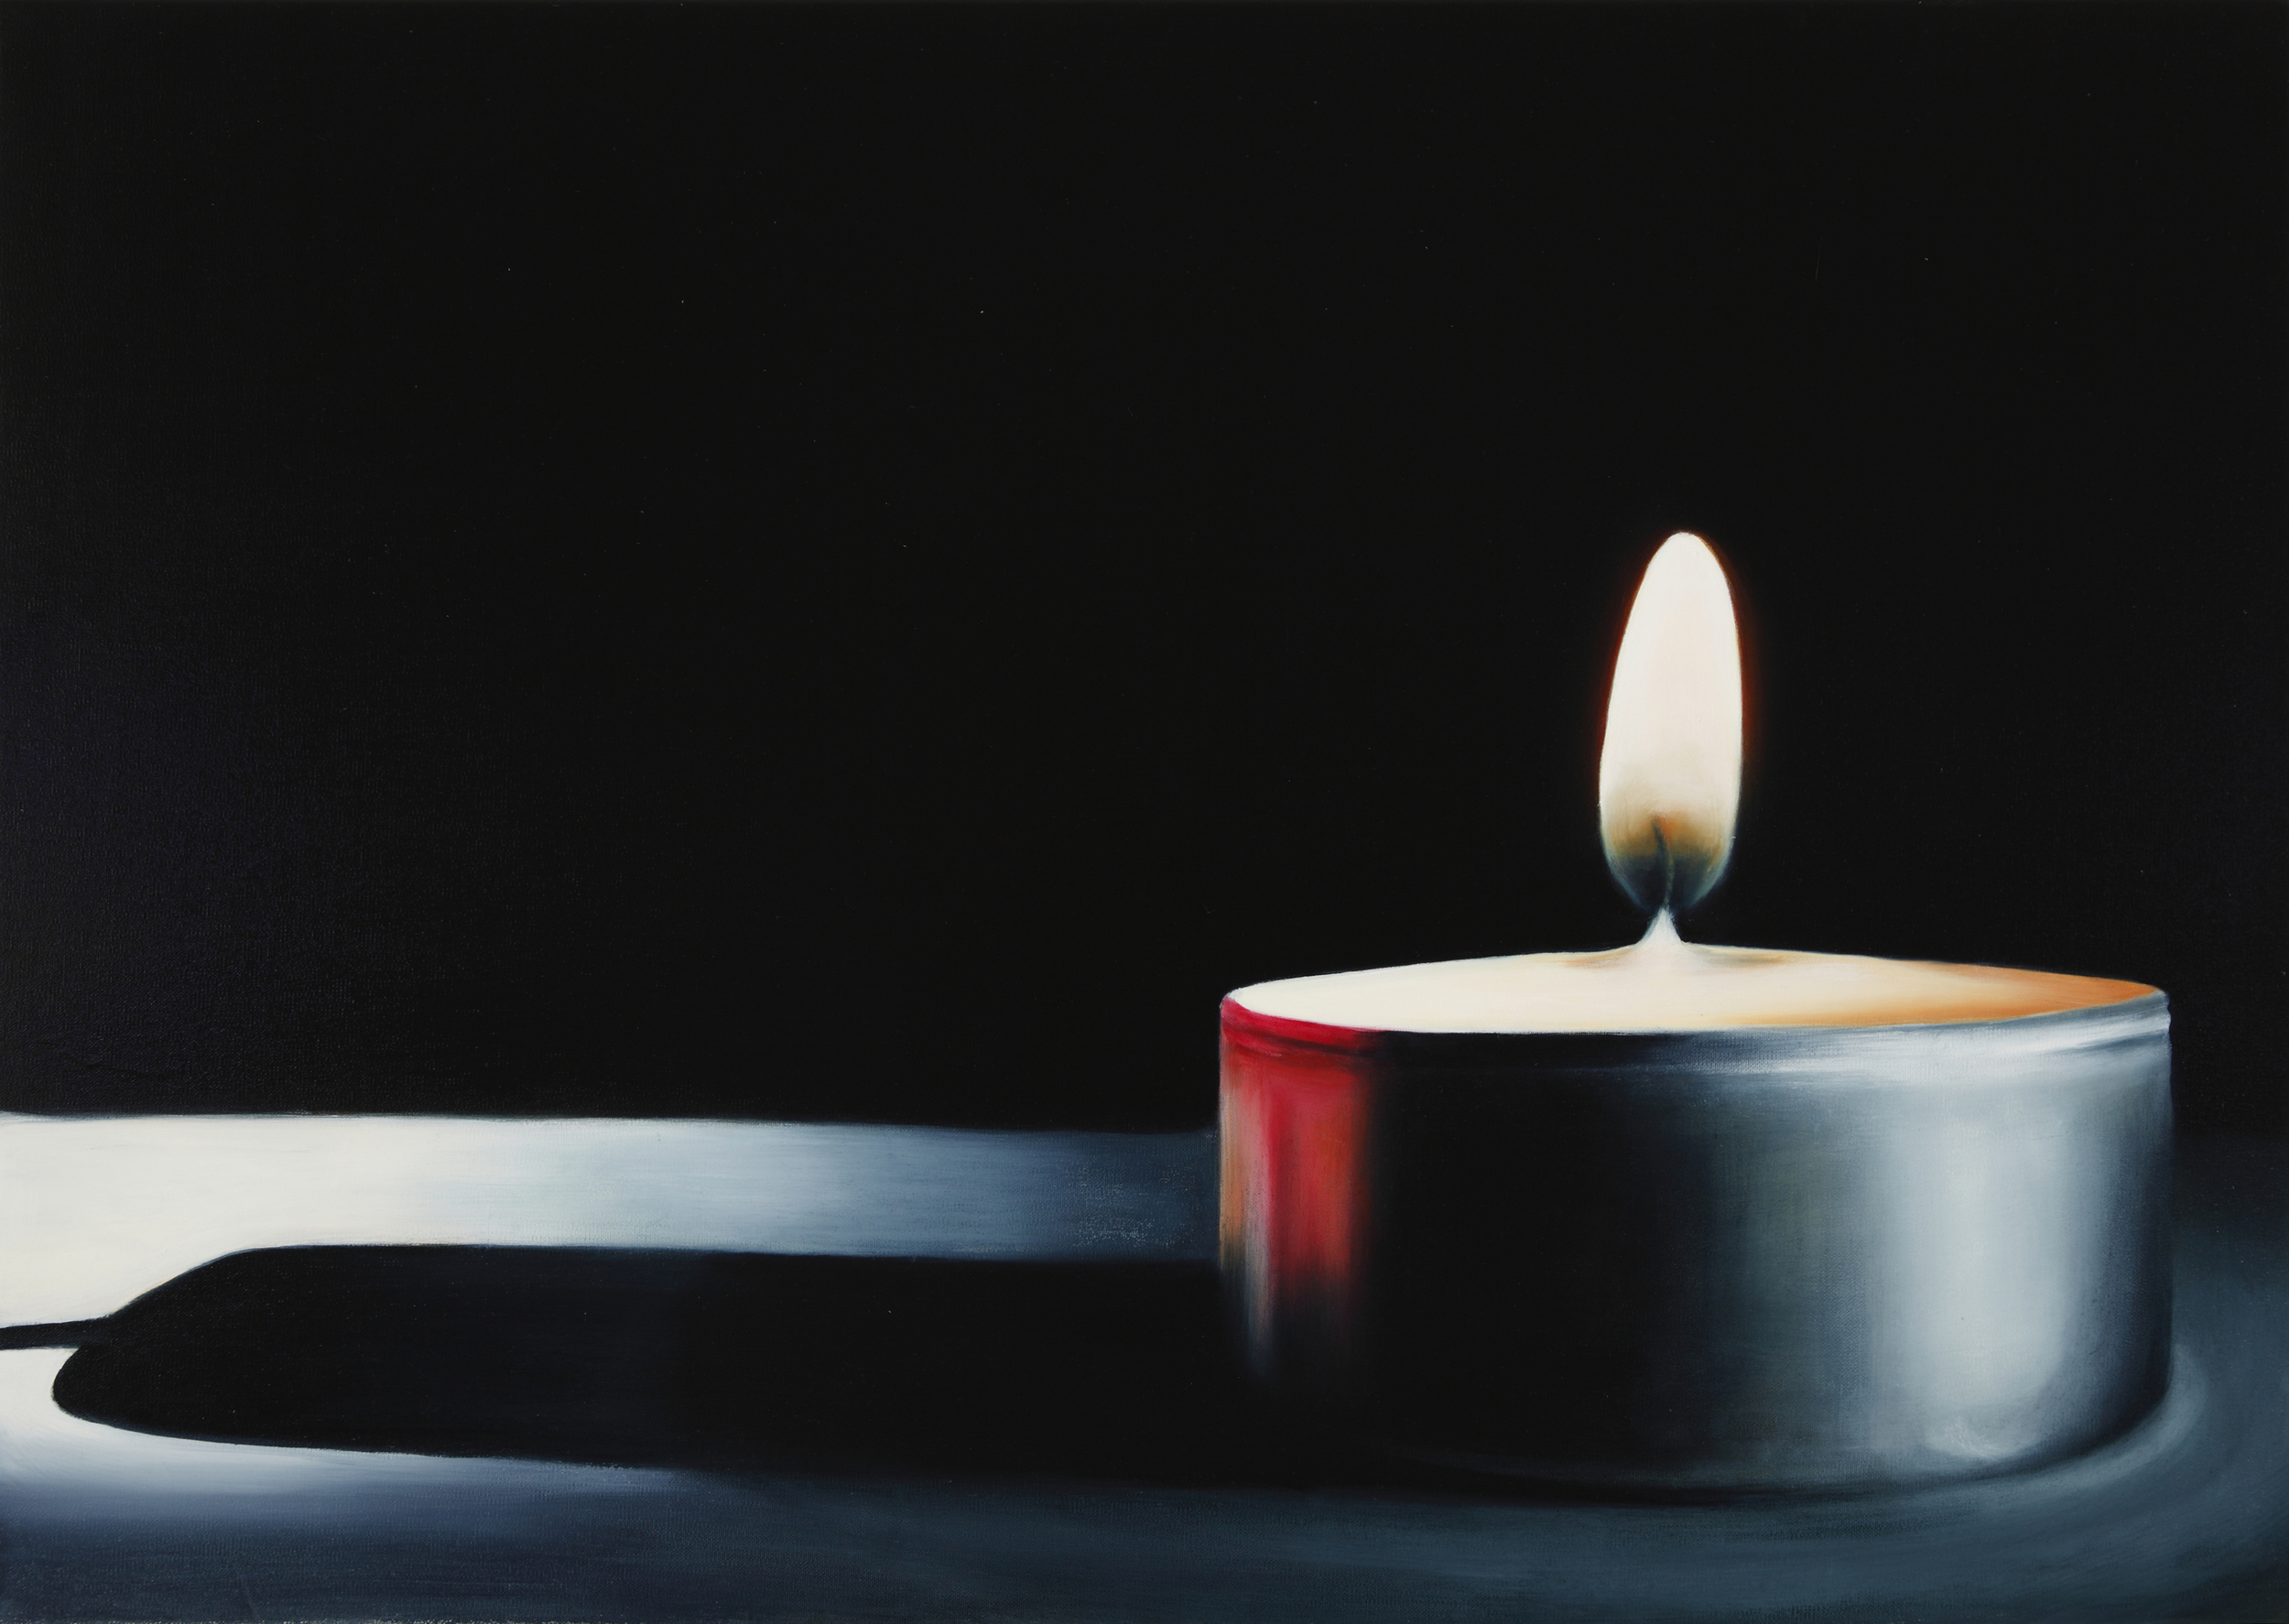 Tea Light, 30" x 20", Oil on Canvas, 2011